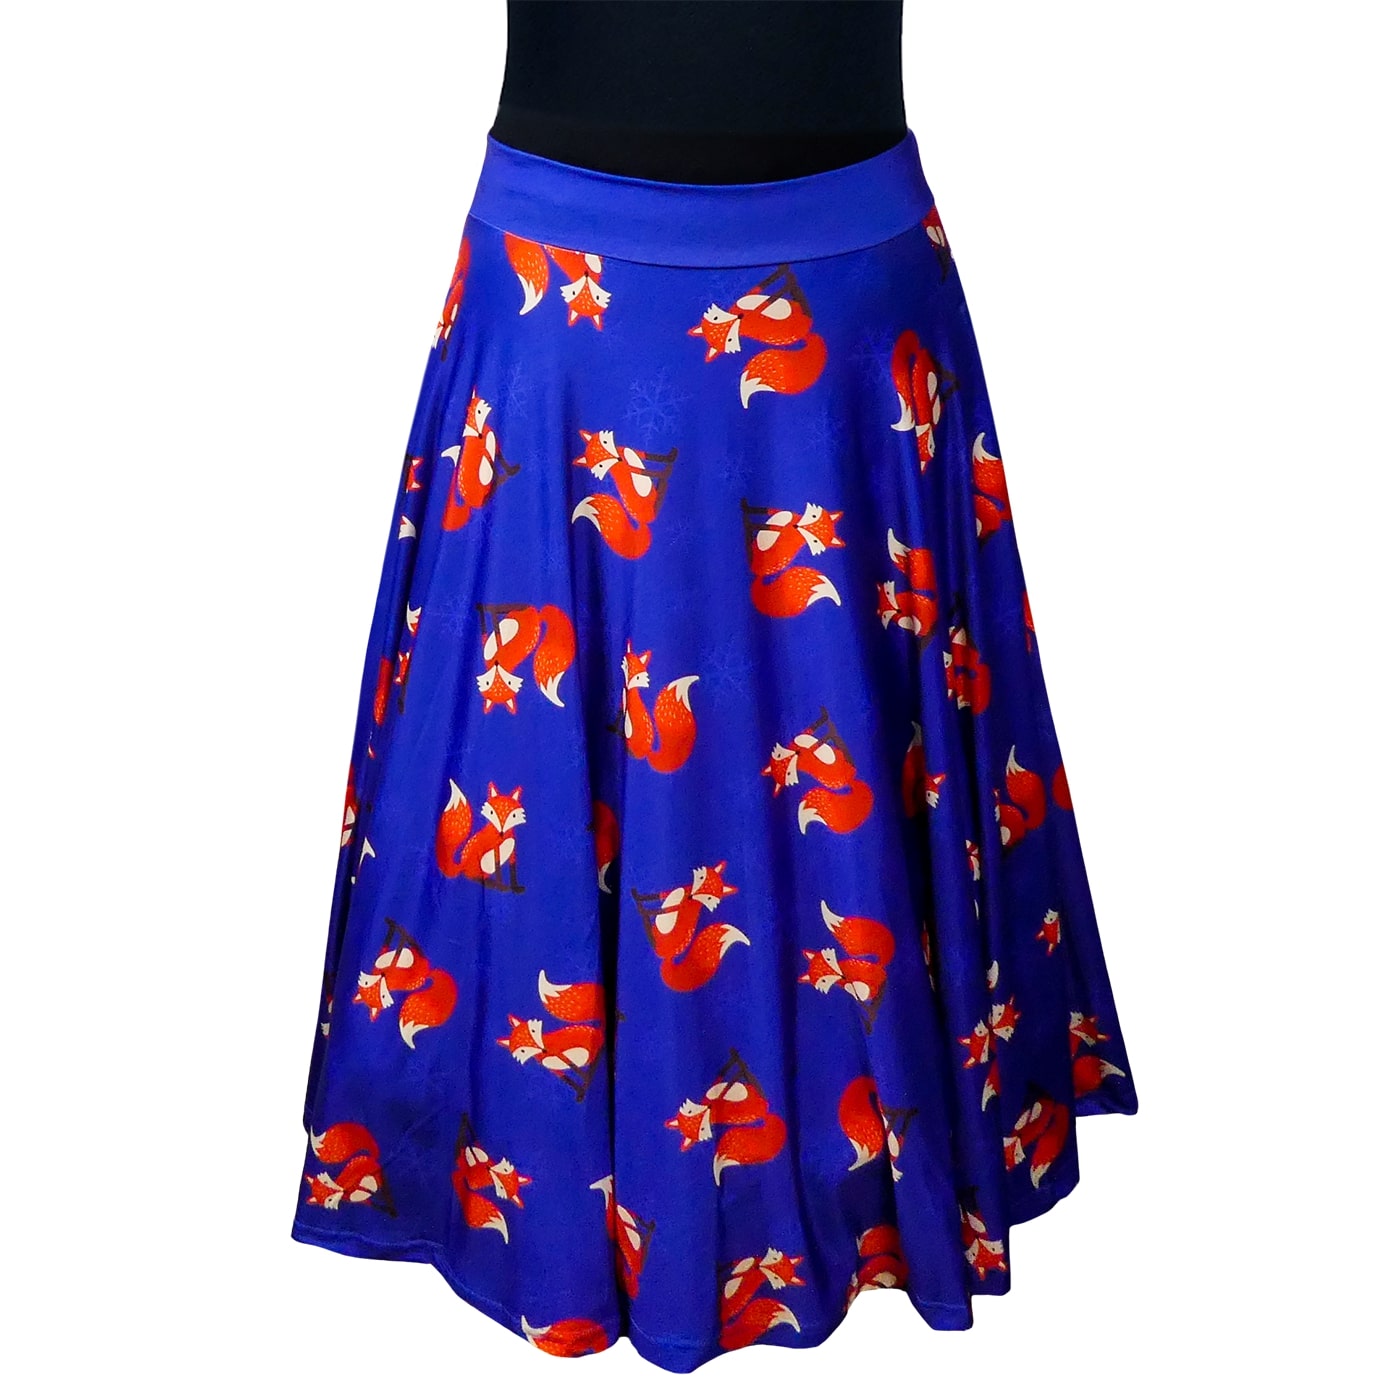 Howard Swishy Skirt by RainbowsAndFairies.com.au (Red Fox - Foxy - Animal Print - Woodland Creature - Circle Skirt With Pockets - Mod Retro) - SKU: CL_SWISH_HOWIE_ORG - Pic-01